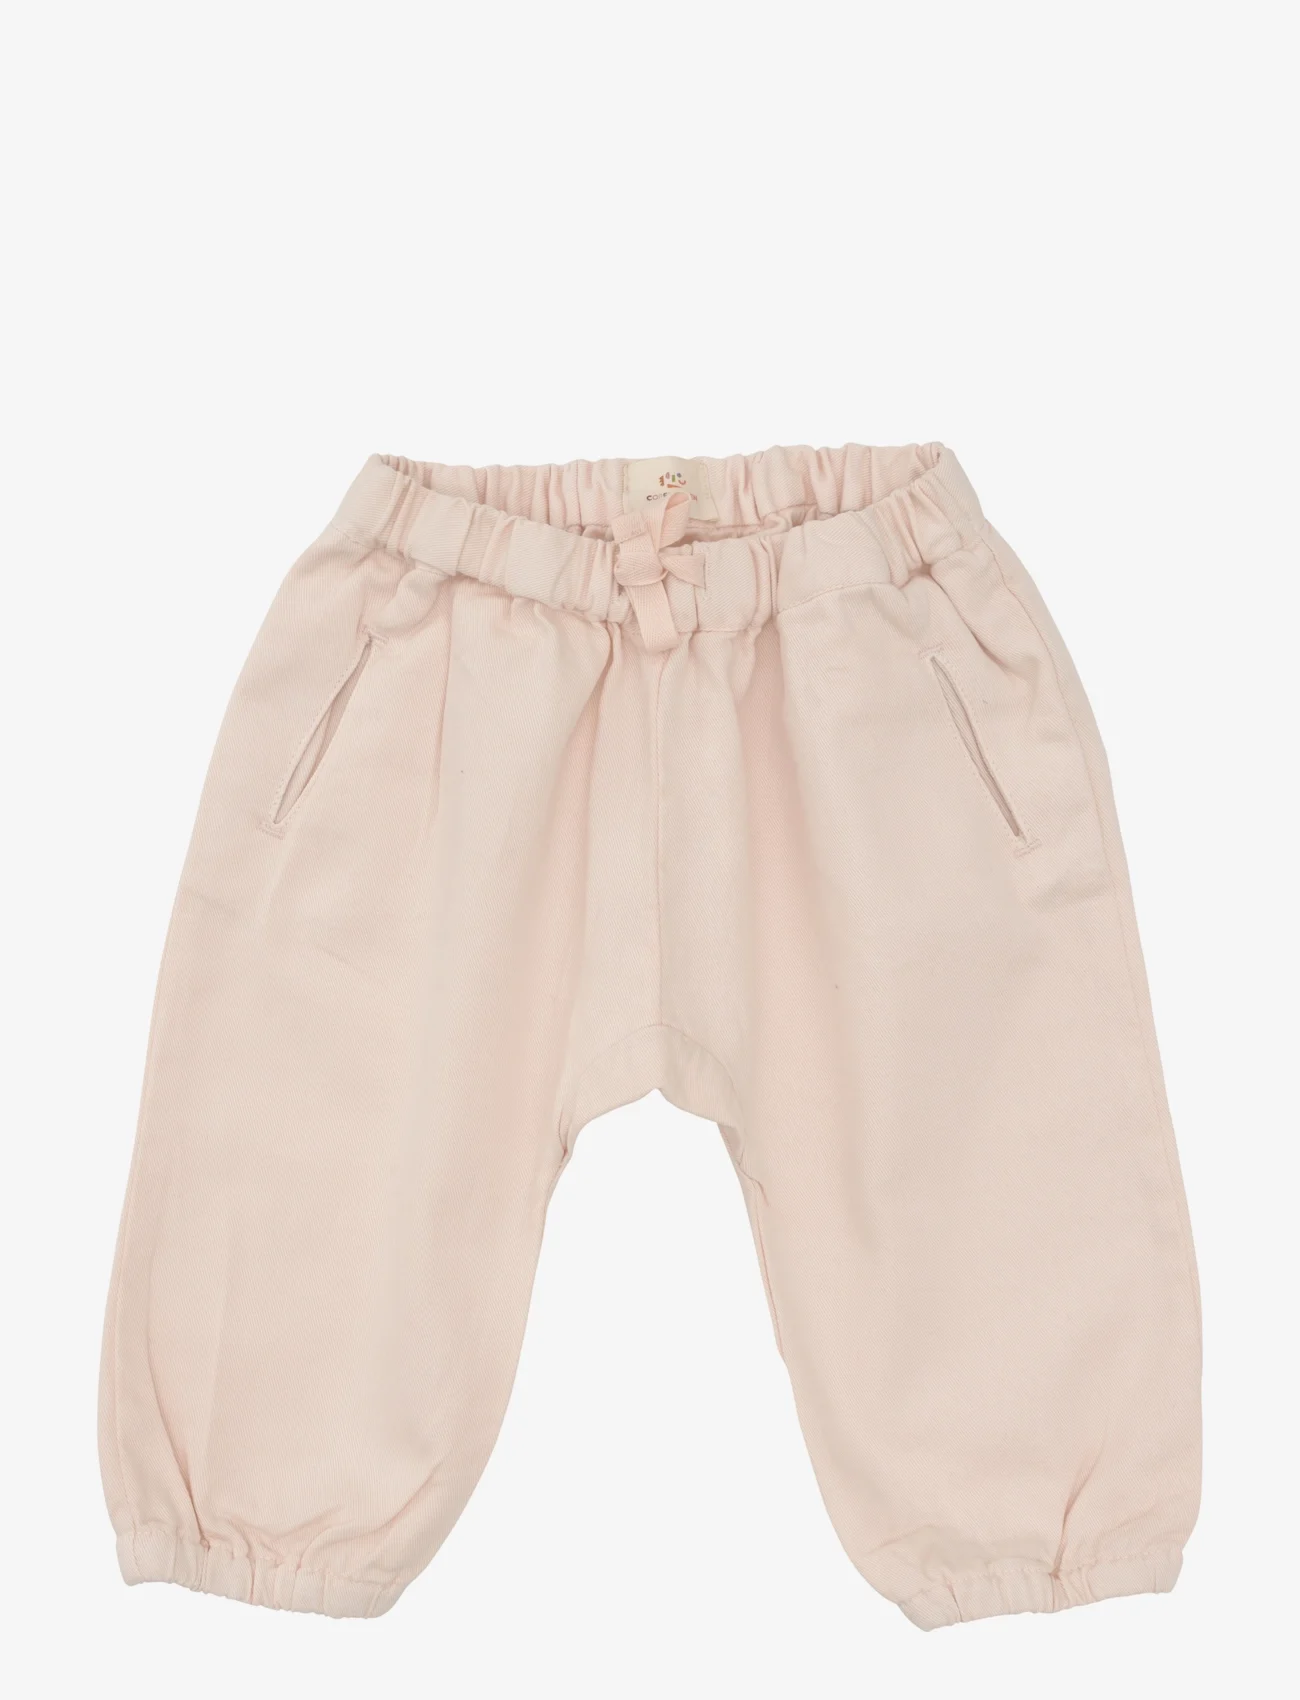 Copenhagen Colors - TWILL BABY PANTS - summer savings - soft pink - 0